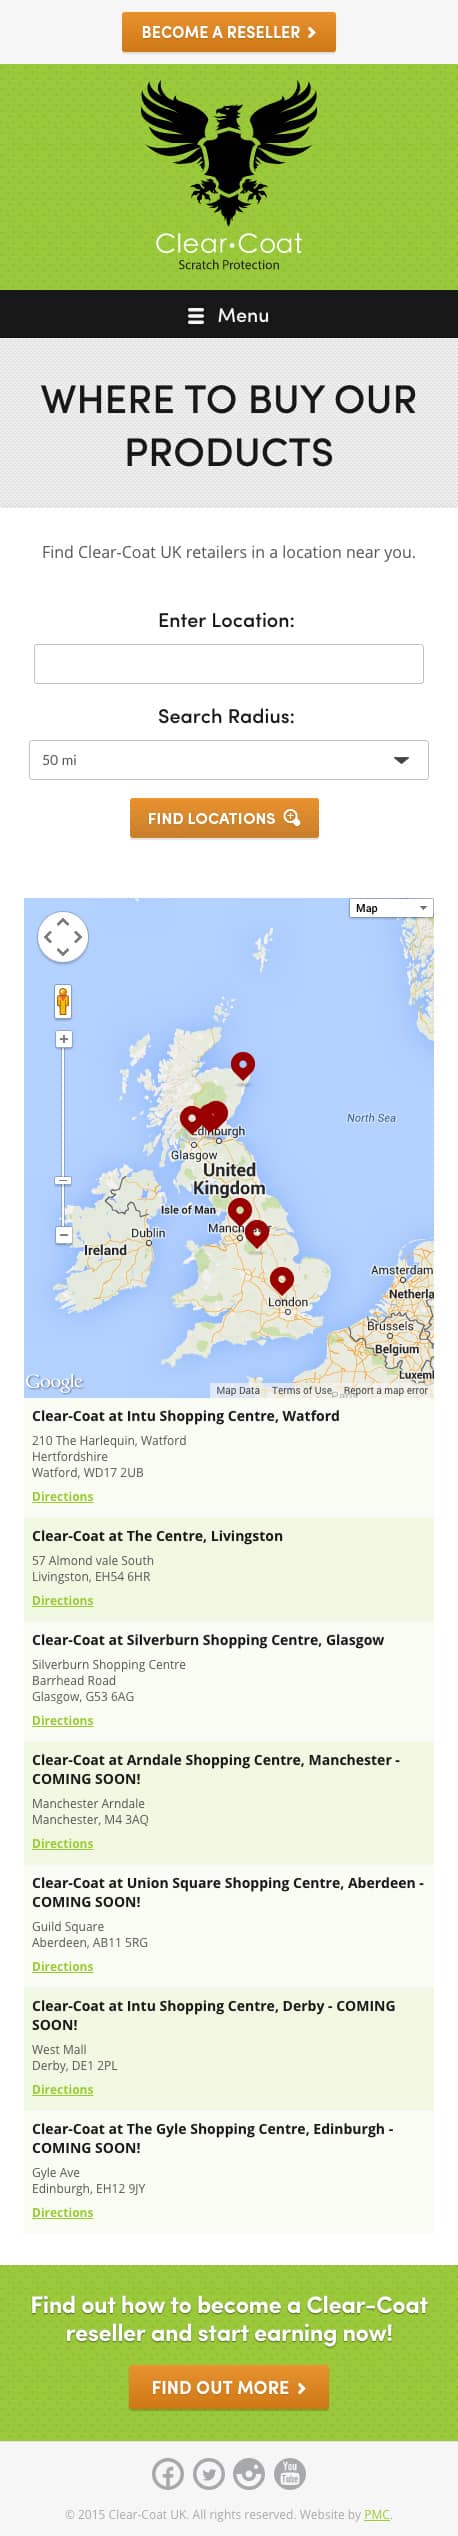 Clear-Coat UK Locations